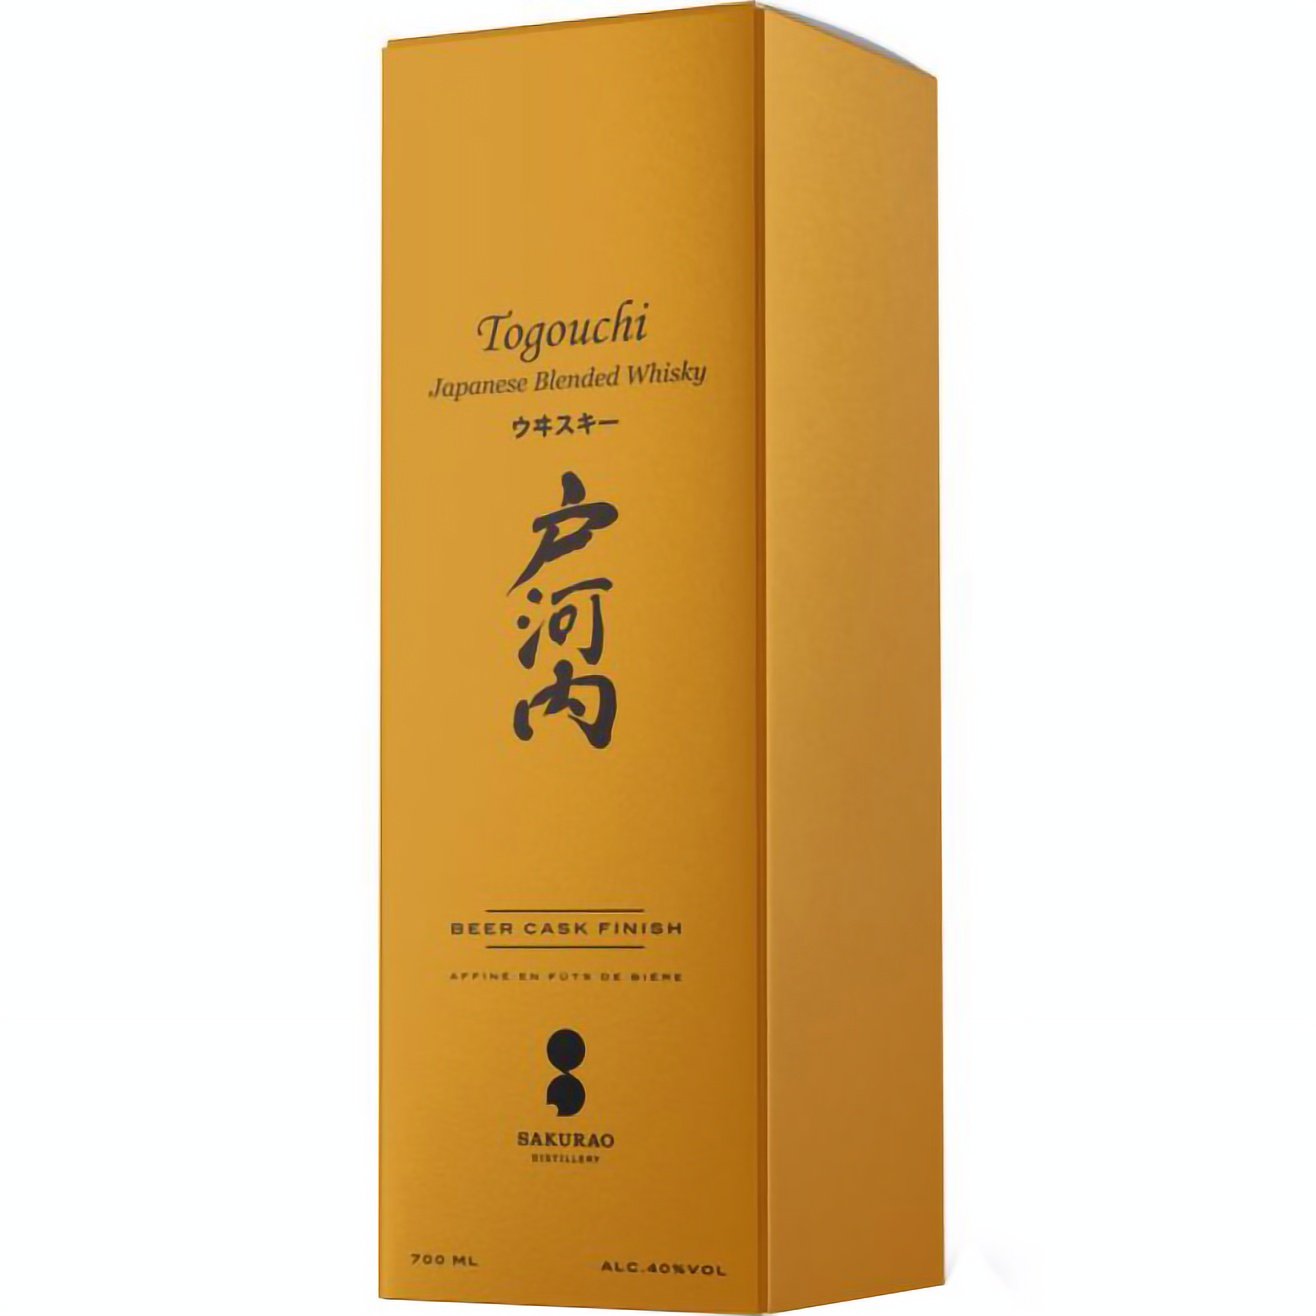 Віскі Togouchi Beer Cask Finish Blended Japanese Whisky, 40%, 0,7 л, у подарунковій упаковці - фото 3